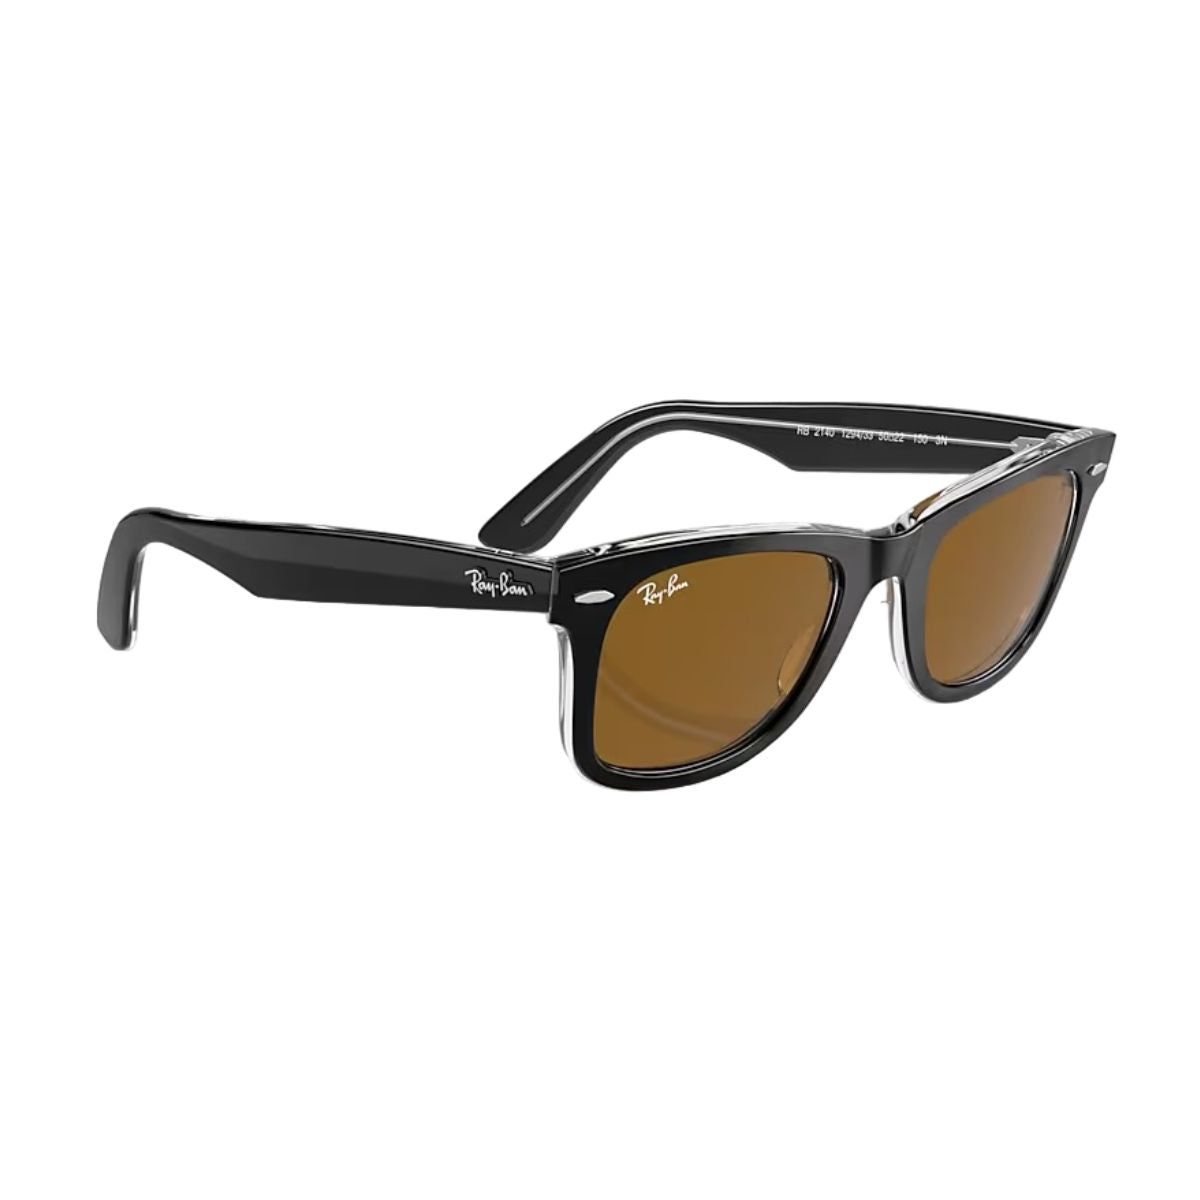 "Stylish Rayban 2140 1294/33 Eyewear sunglasses for Men And Women Online At Optorium"